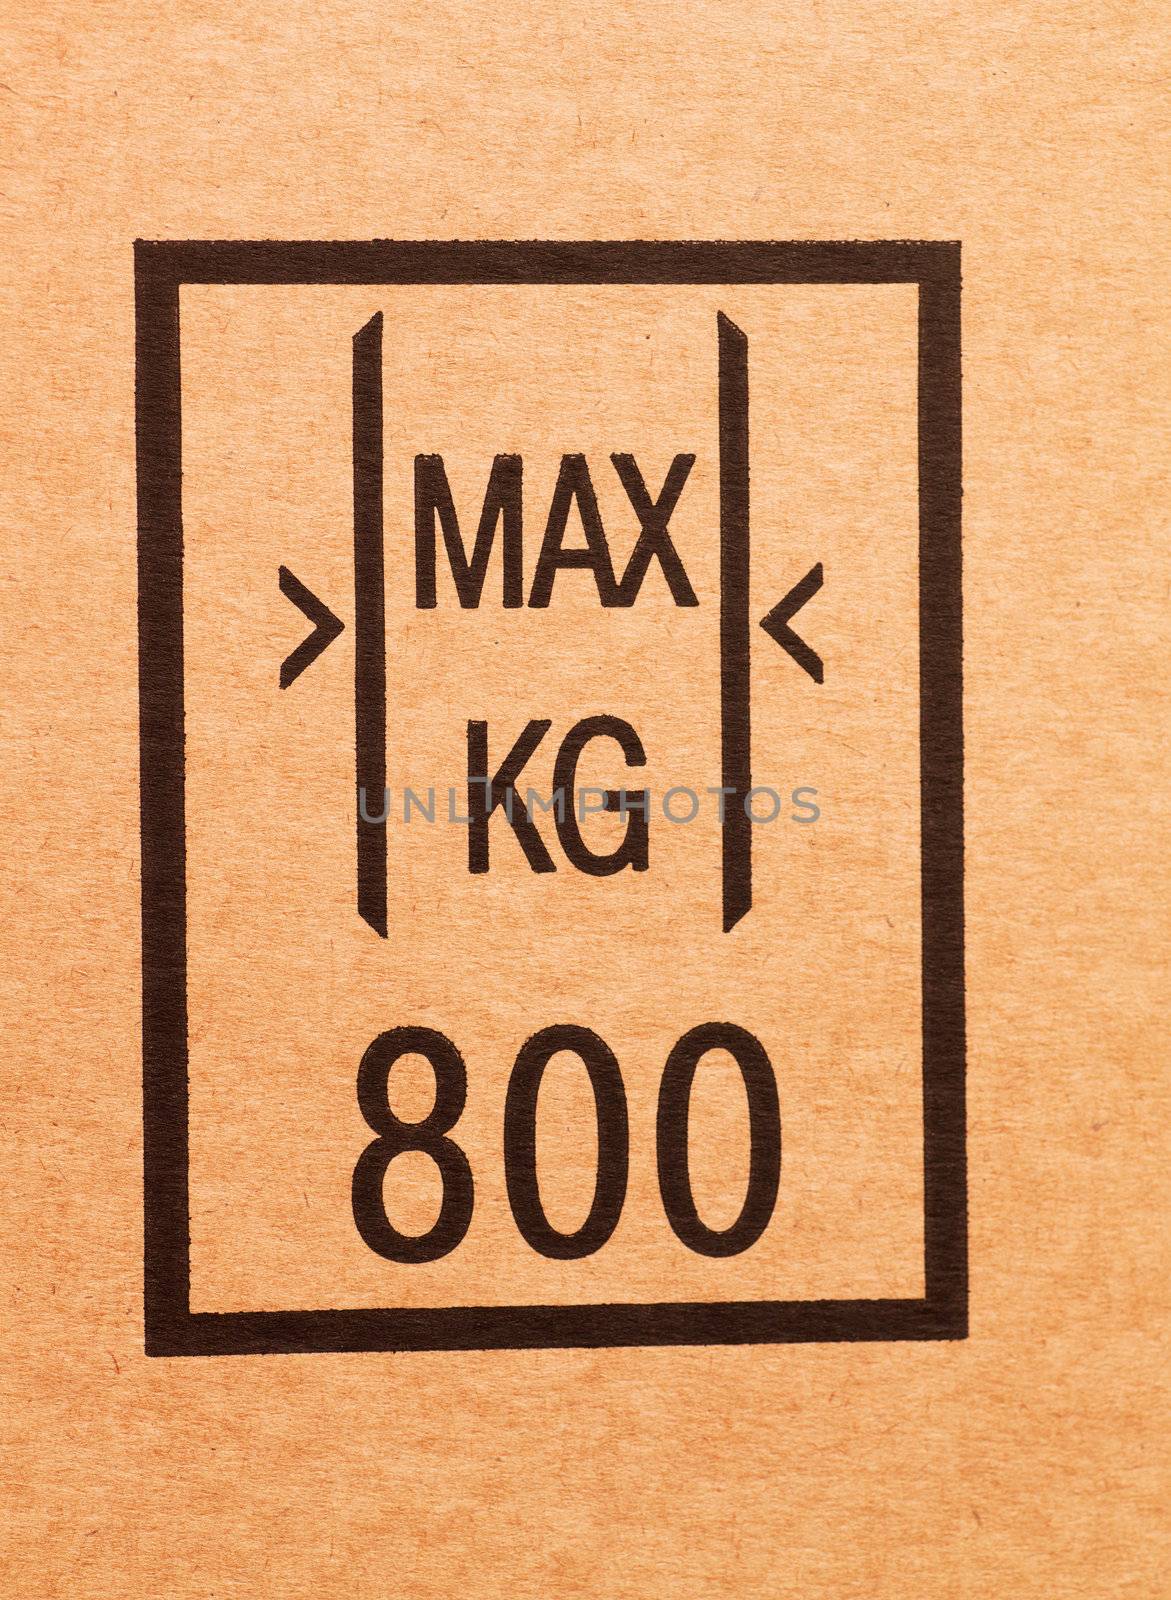 "Maximum load" sign on a cardboard box